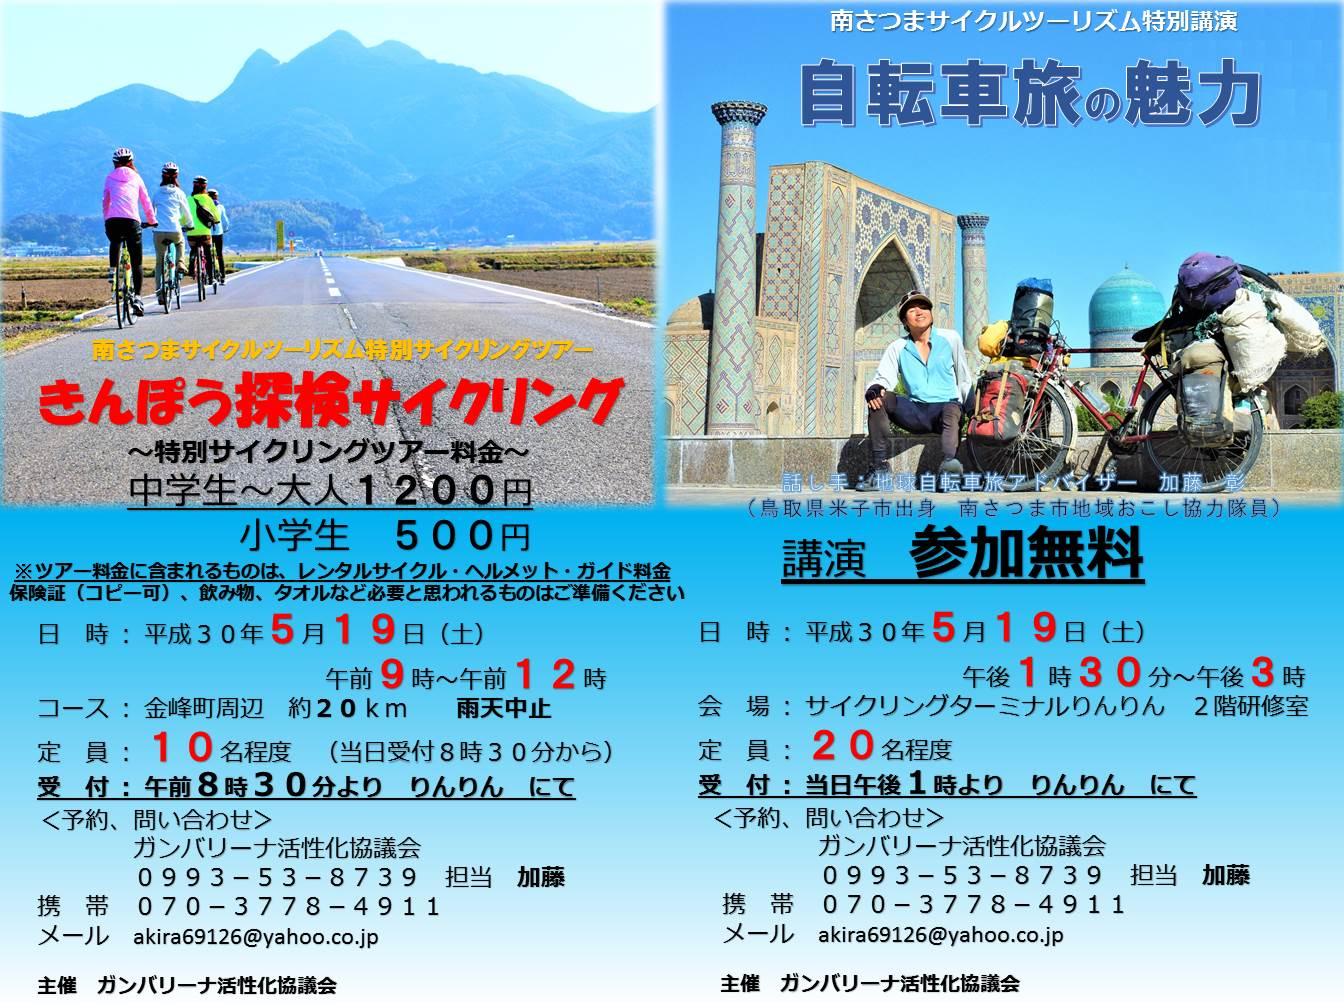 http://www.sand-minamisatsuma.jp/topics/images/2018-cycling-kouenkai.jpg